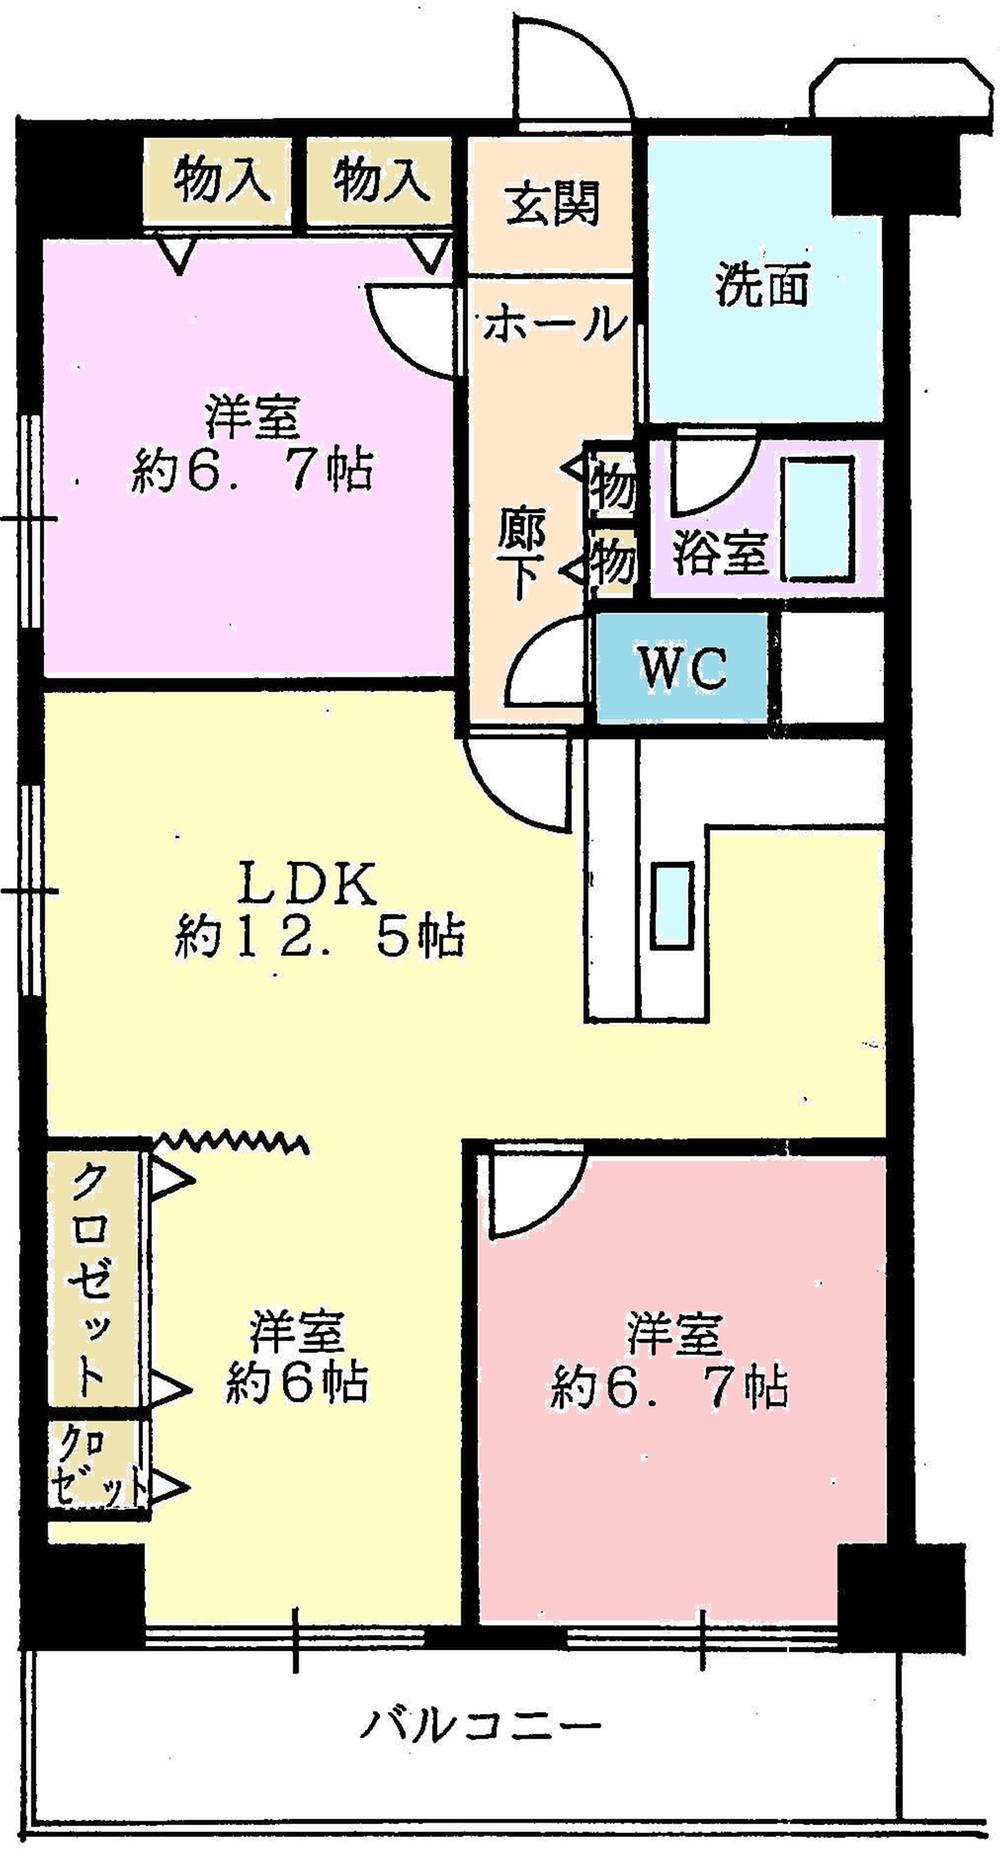 Floor plan. 3LDK, Price 12.6 million yen, Occupied area 73.45 sq m , Balcony area 8.9 sq m